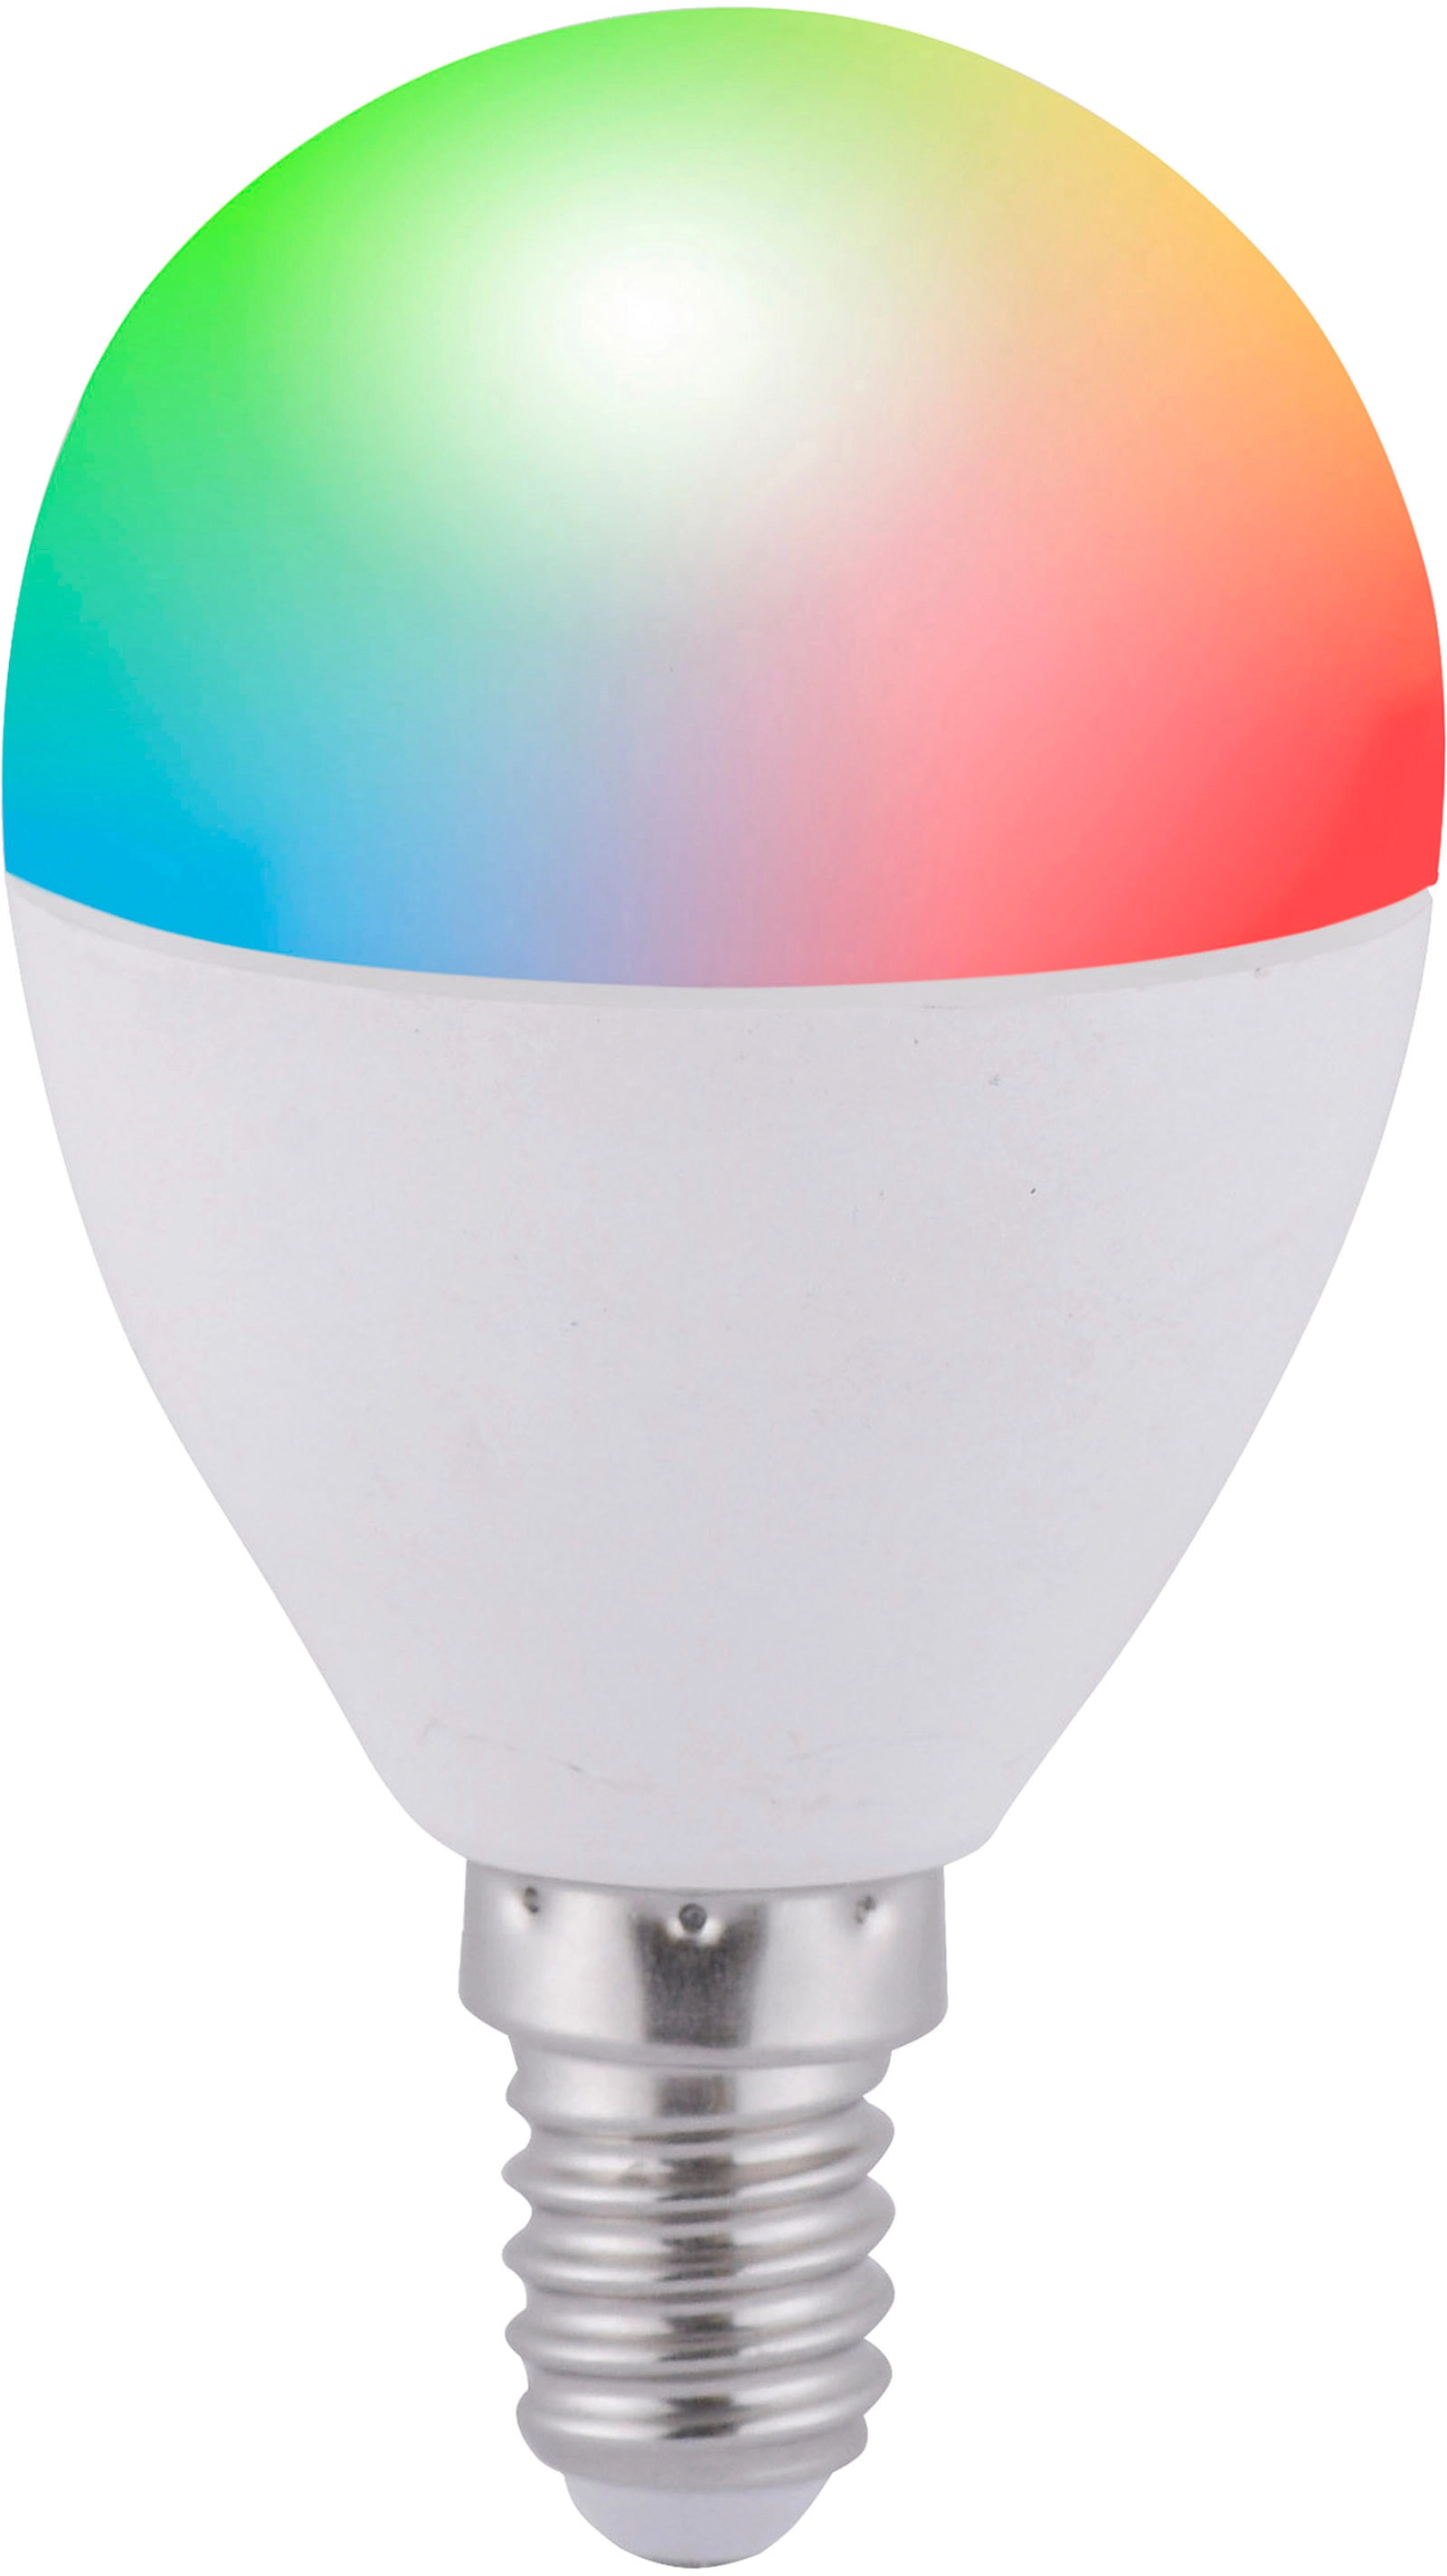 LED-Lampe Lola smart-Bulb RGB 2700-5000K kaufen bei OBI